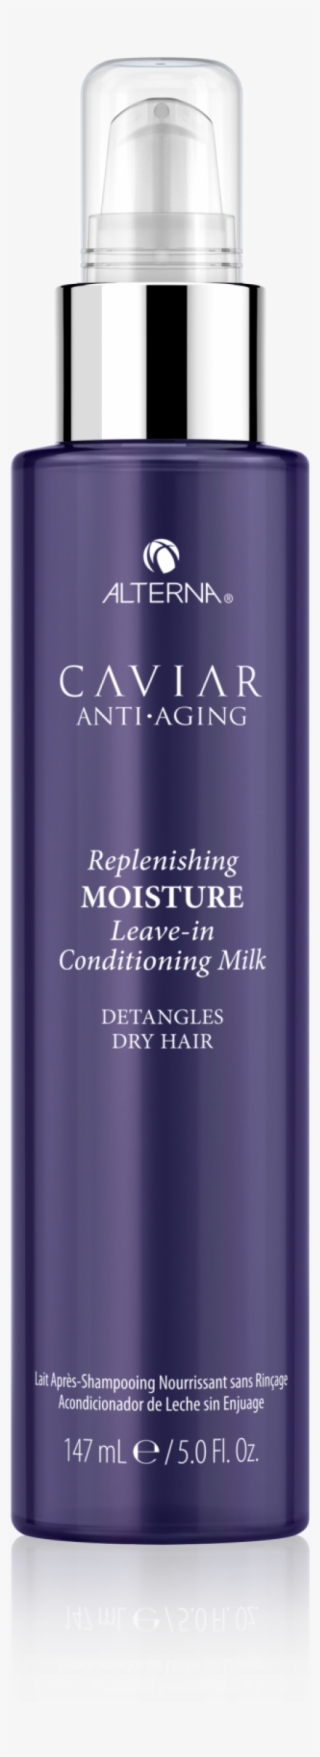 Hi Res Moisture Conditioning Milk 5 Oz - Alterna Caviar Anti-aging Replenishing Moisture Shampoo